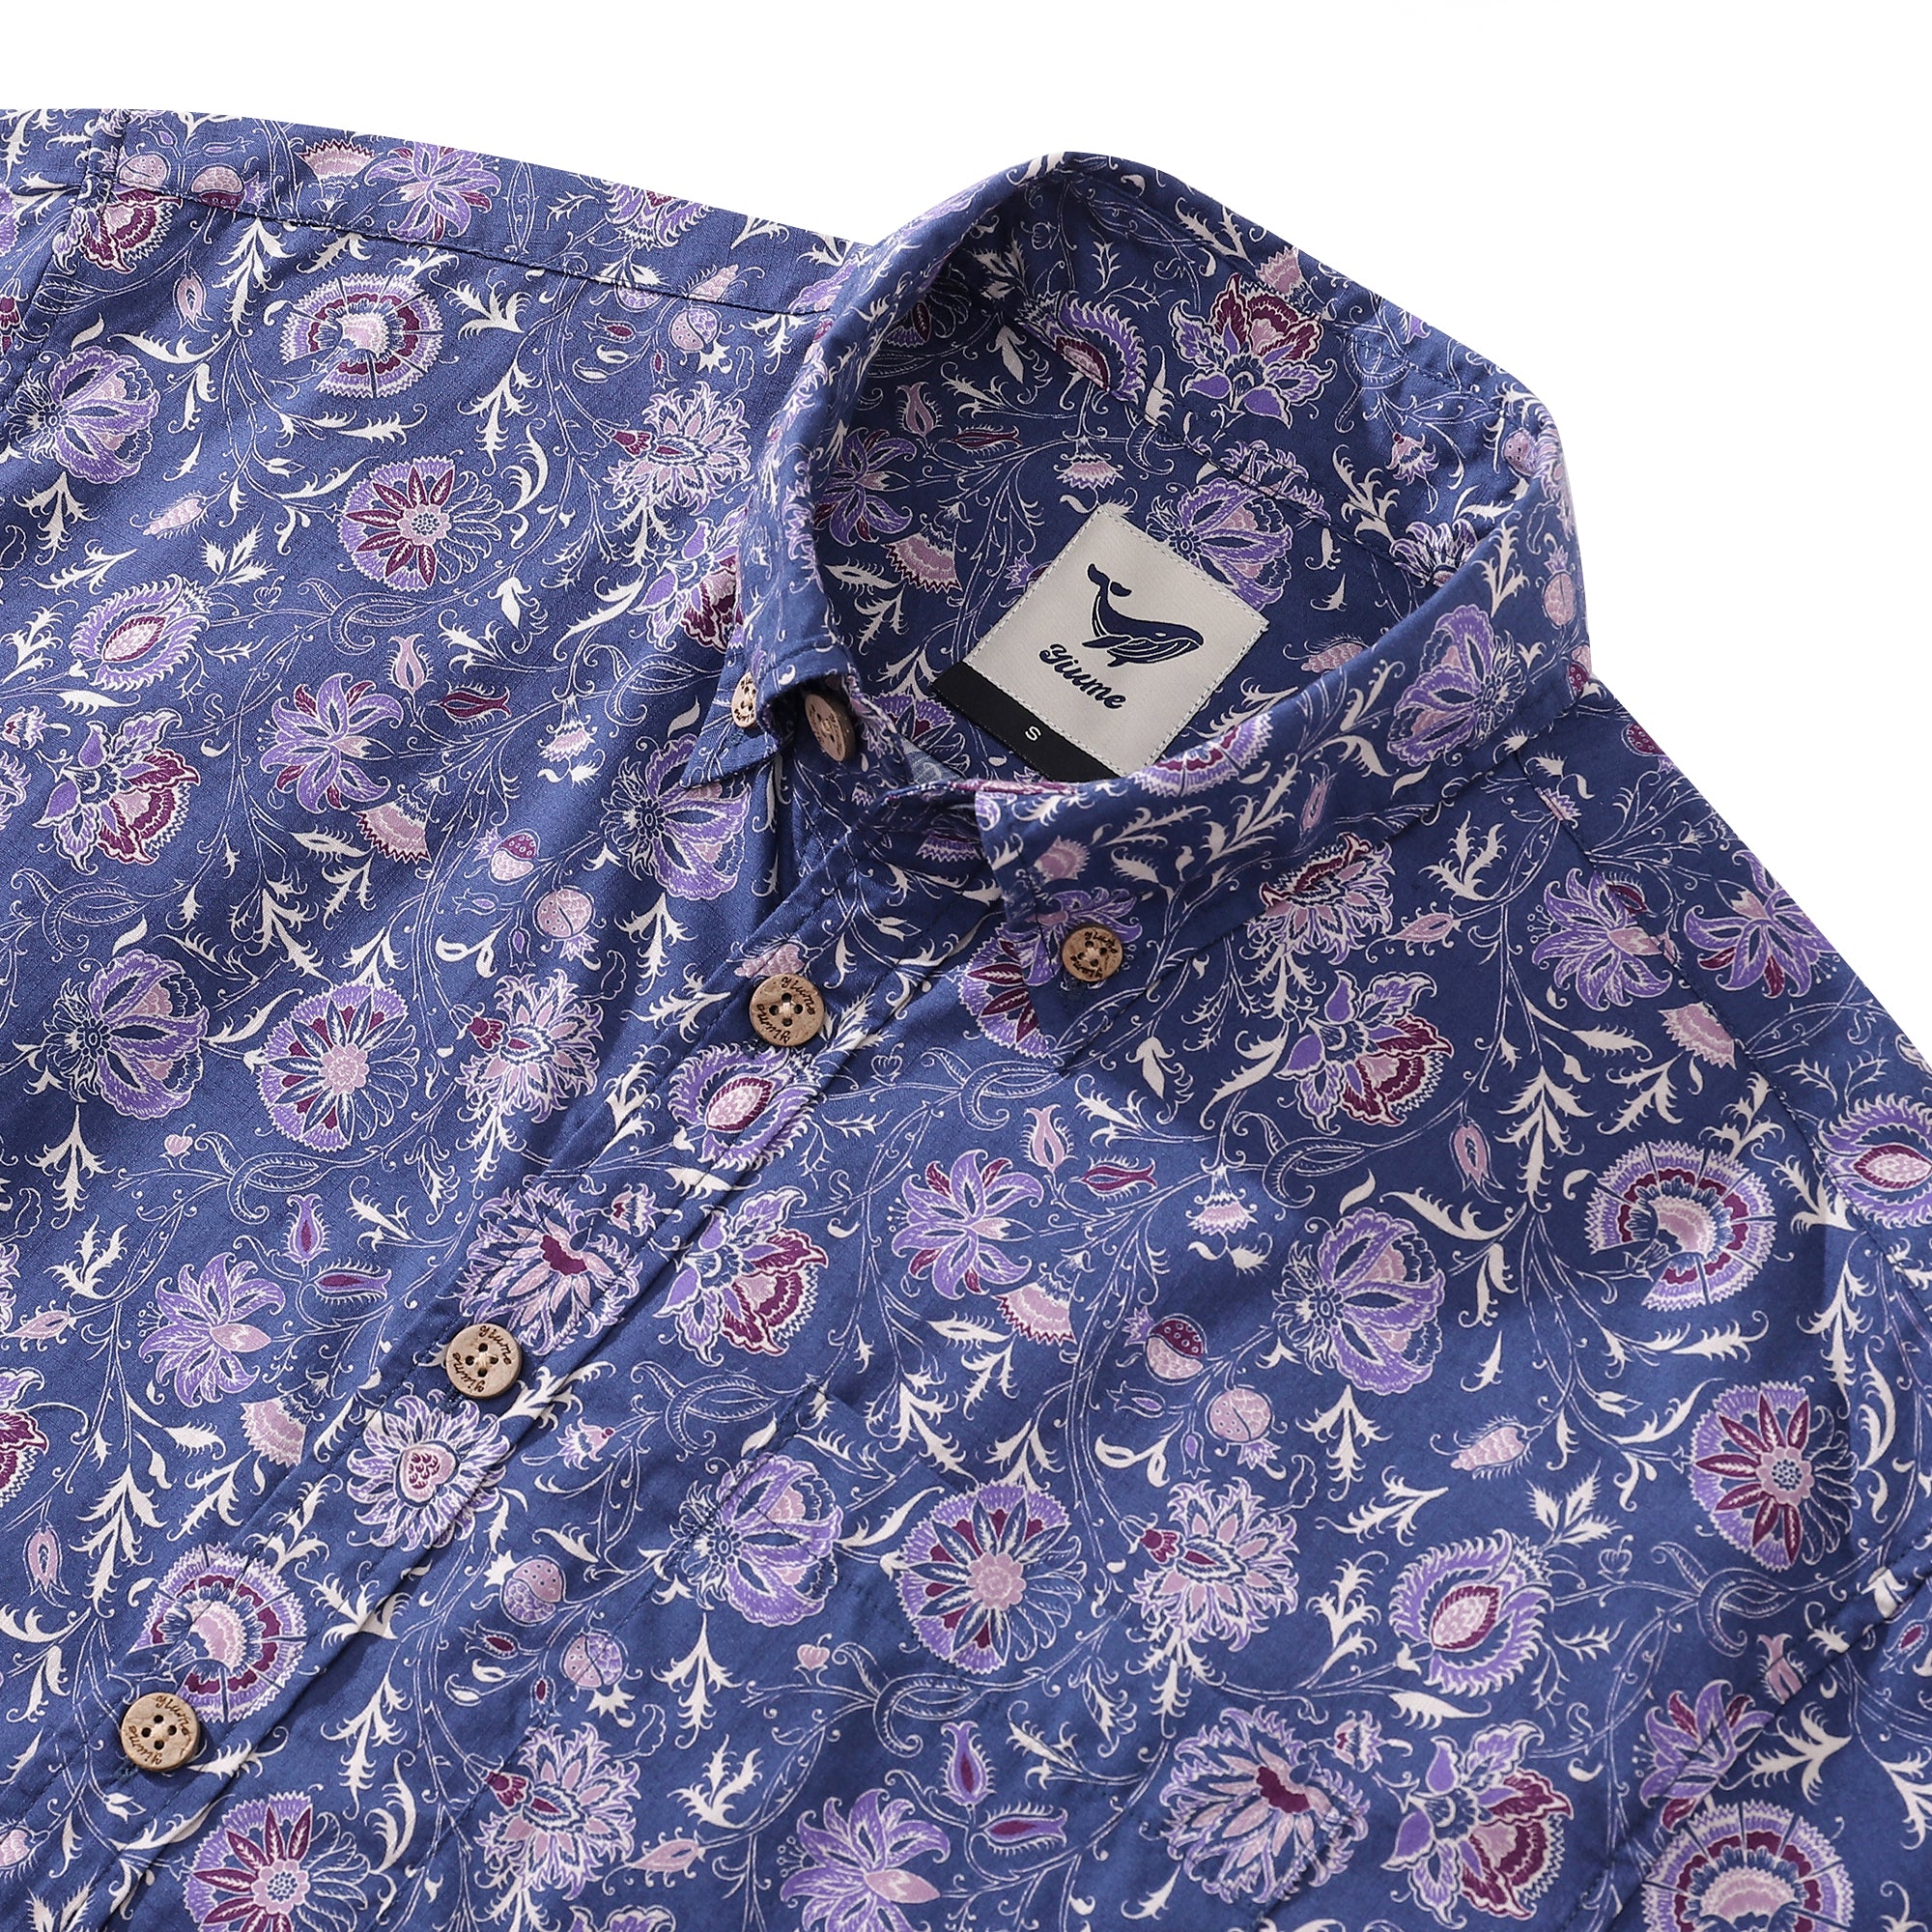 Men's Hawaiian Shirt Mystic Flowers Print Cotton Button-down Short Sleeve Aloha Shirt